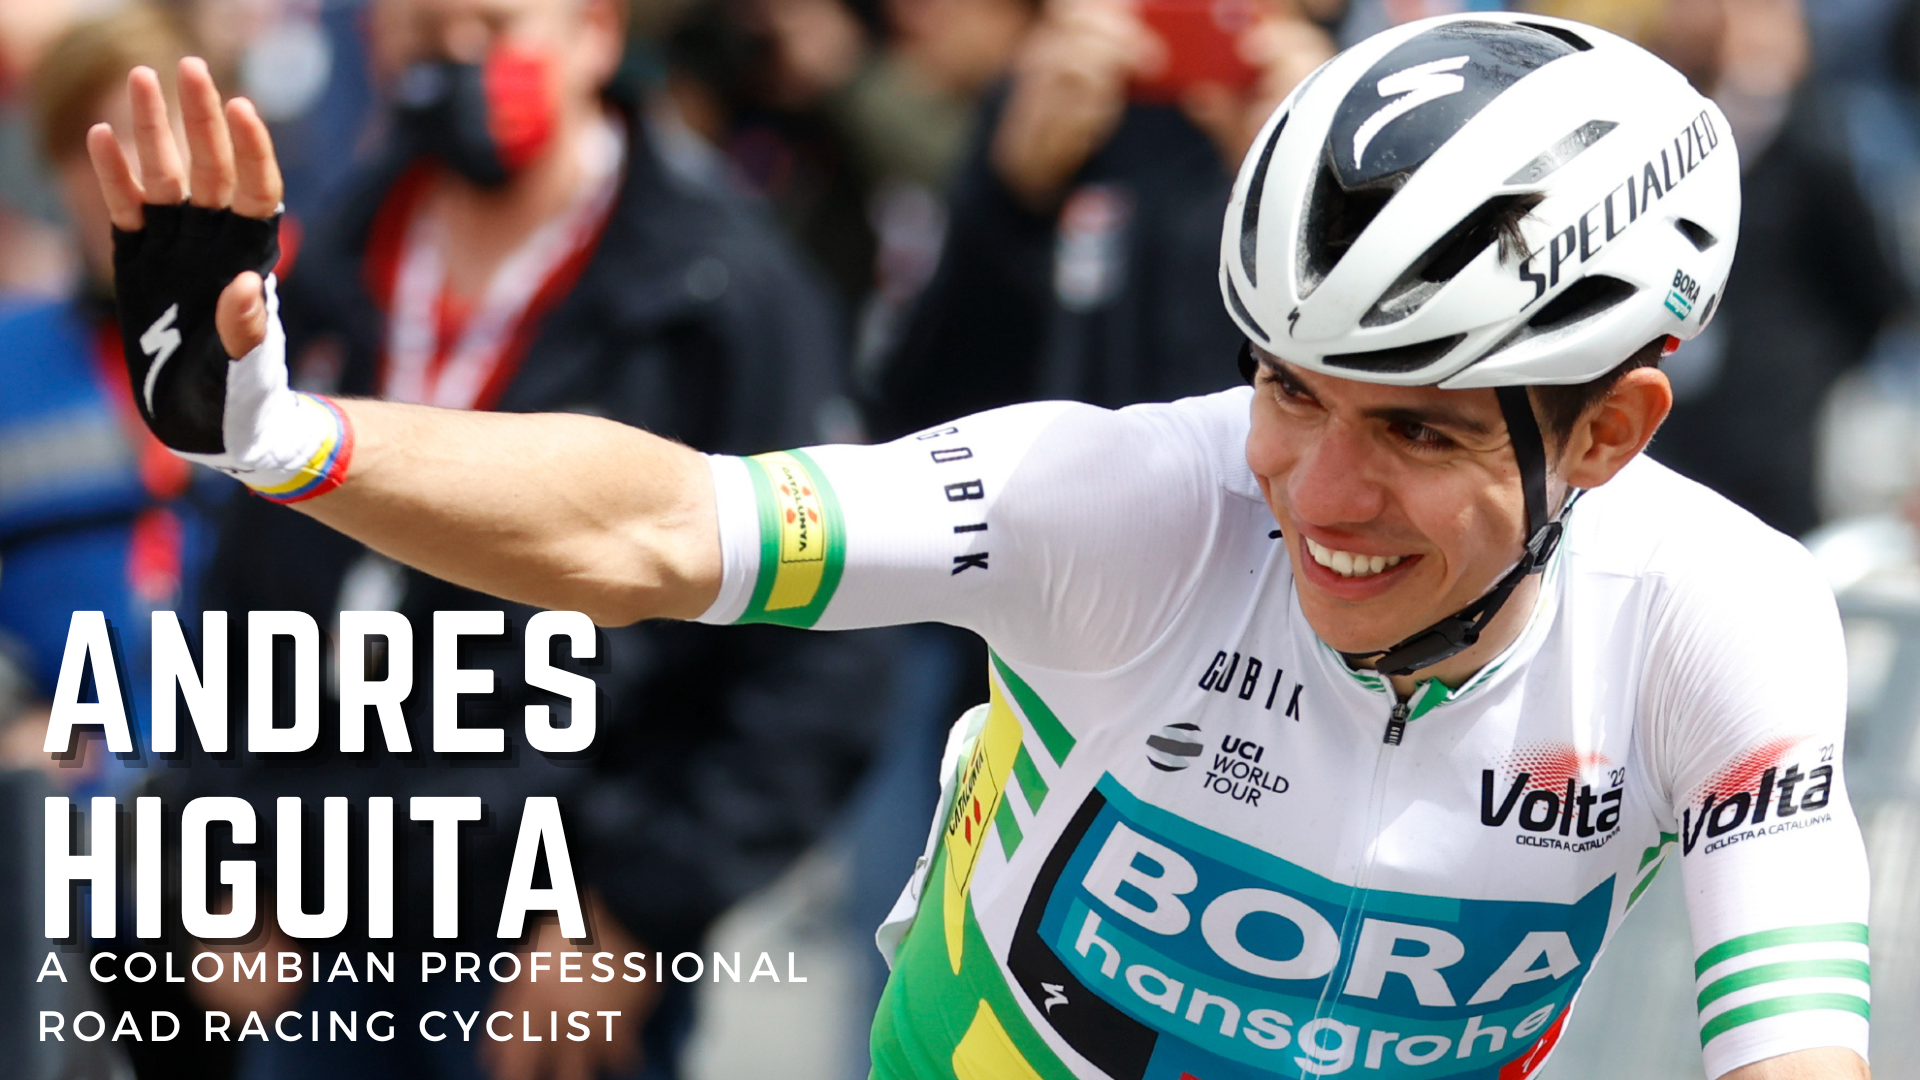 Andres Higuita - A Colombian Professional Road Racing Cyclist